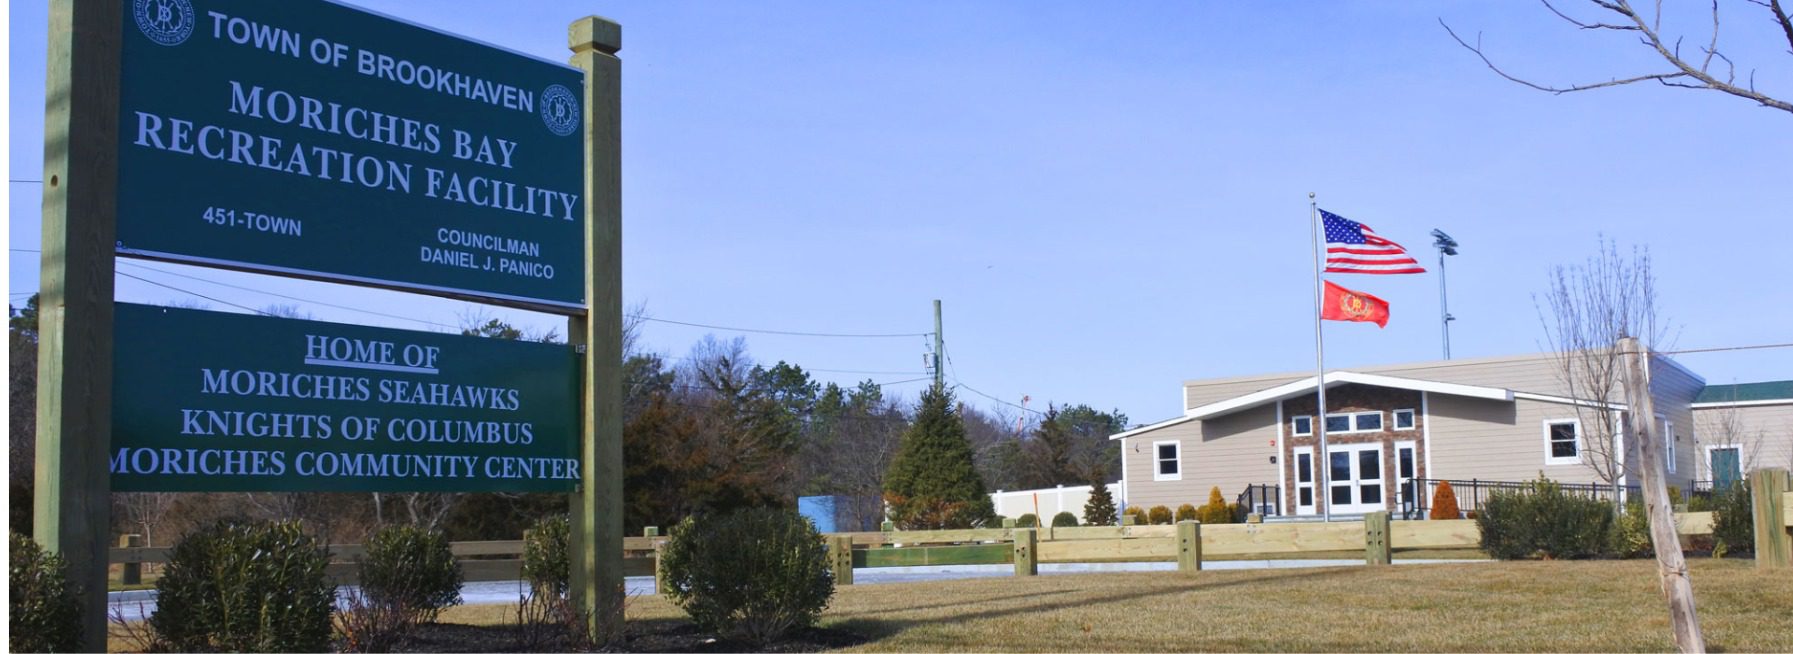 Moriches Community Center building